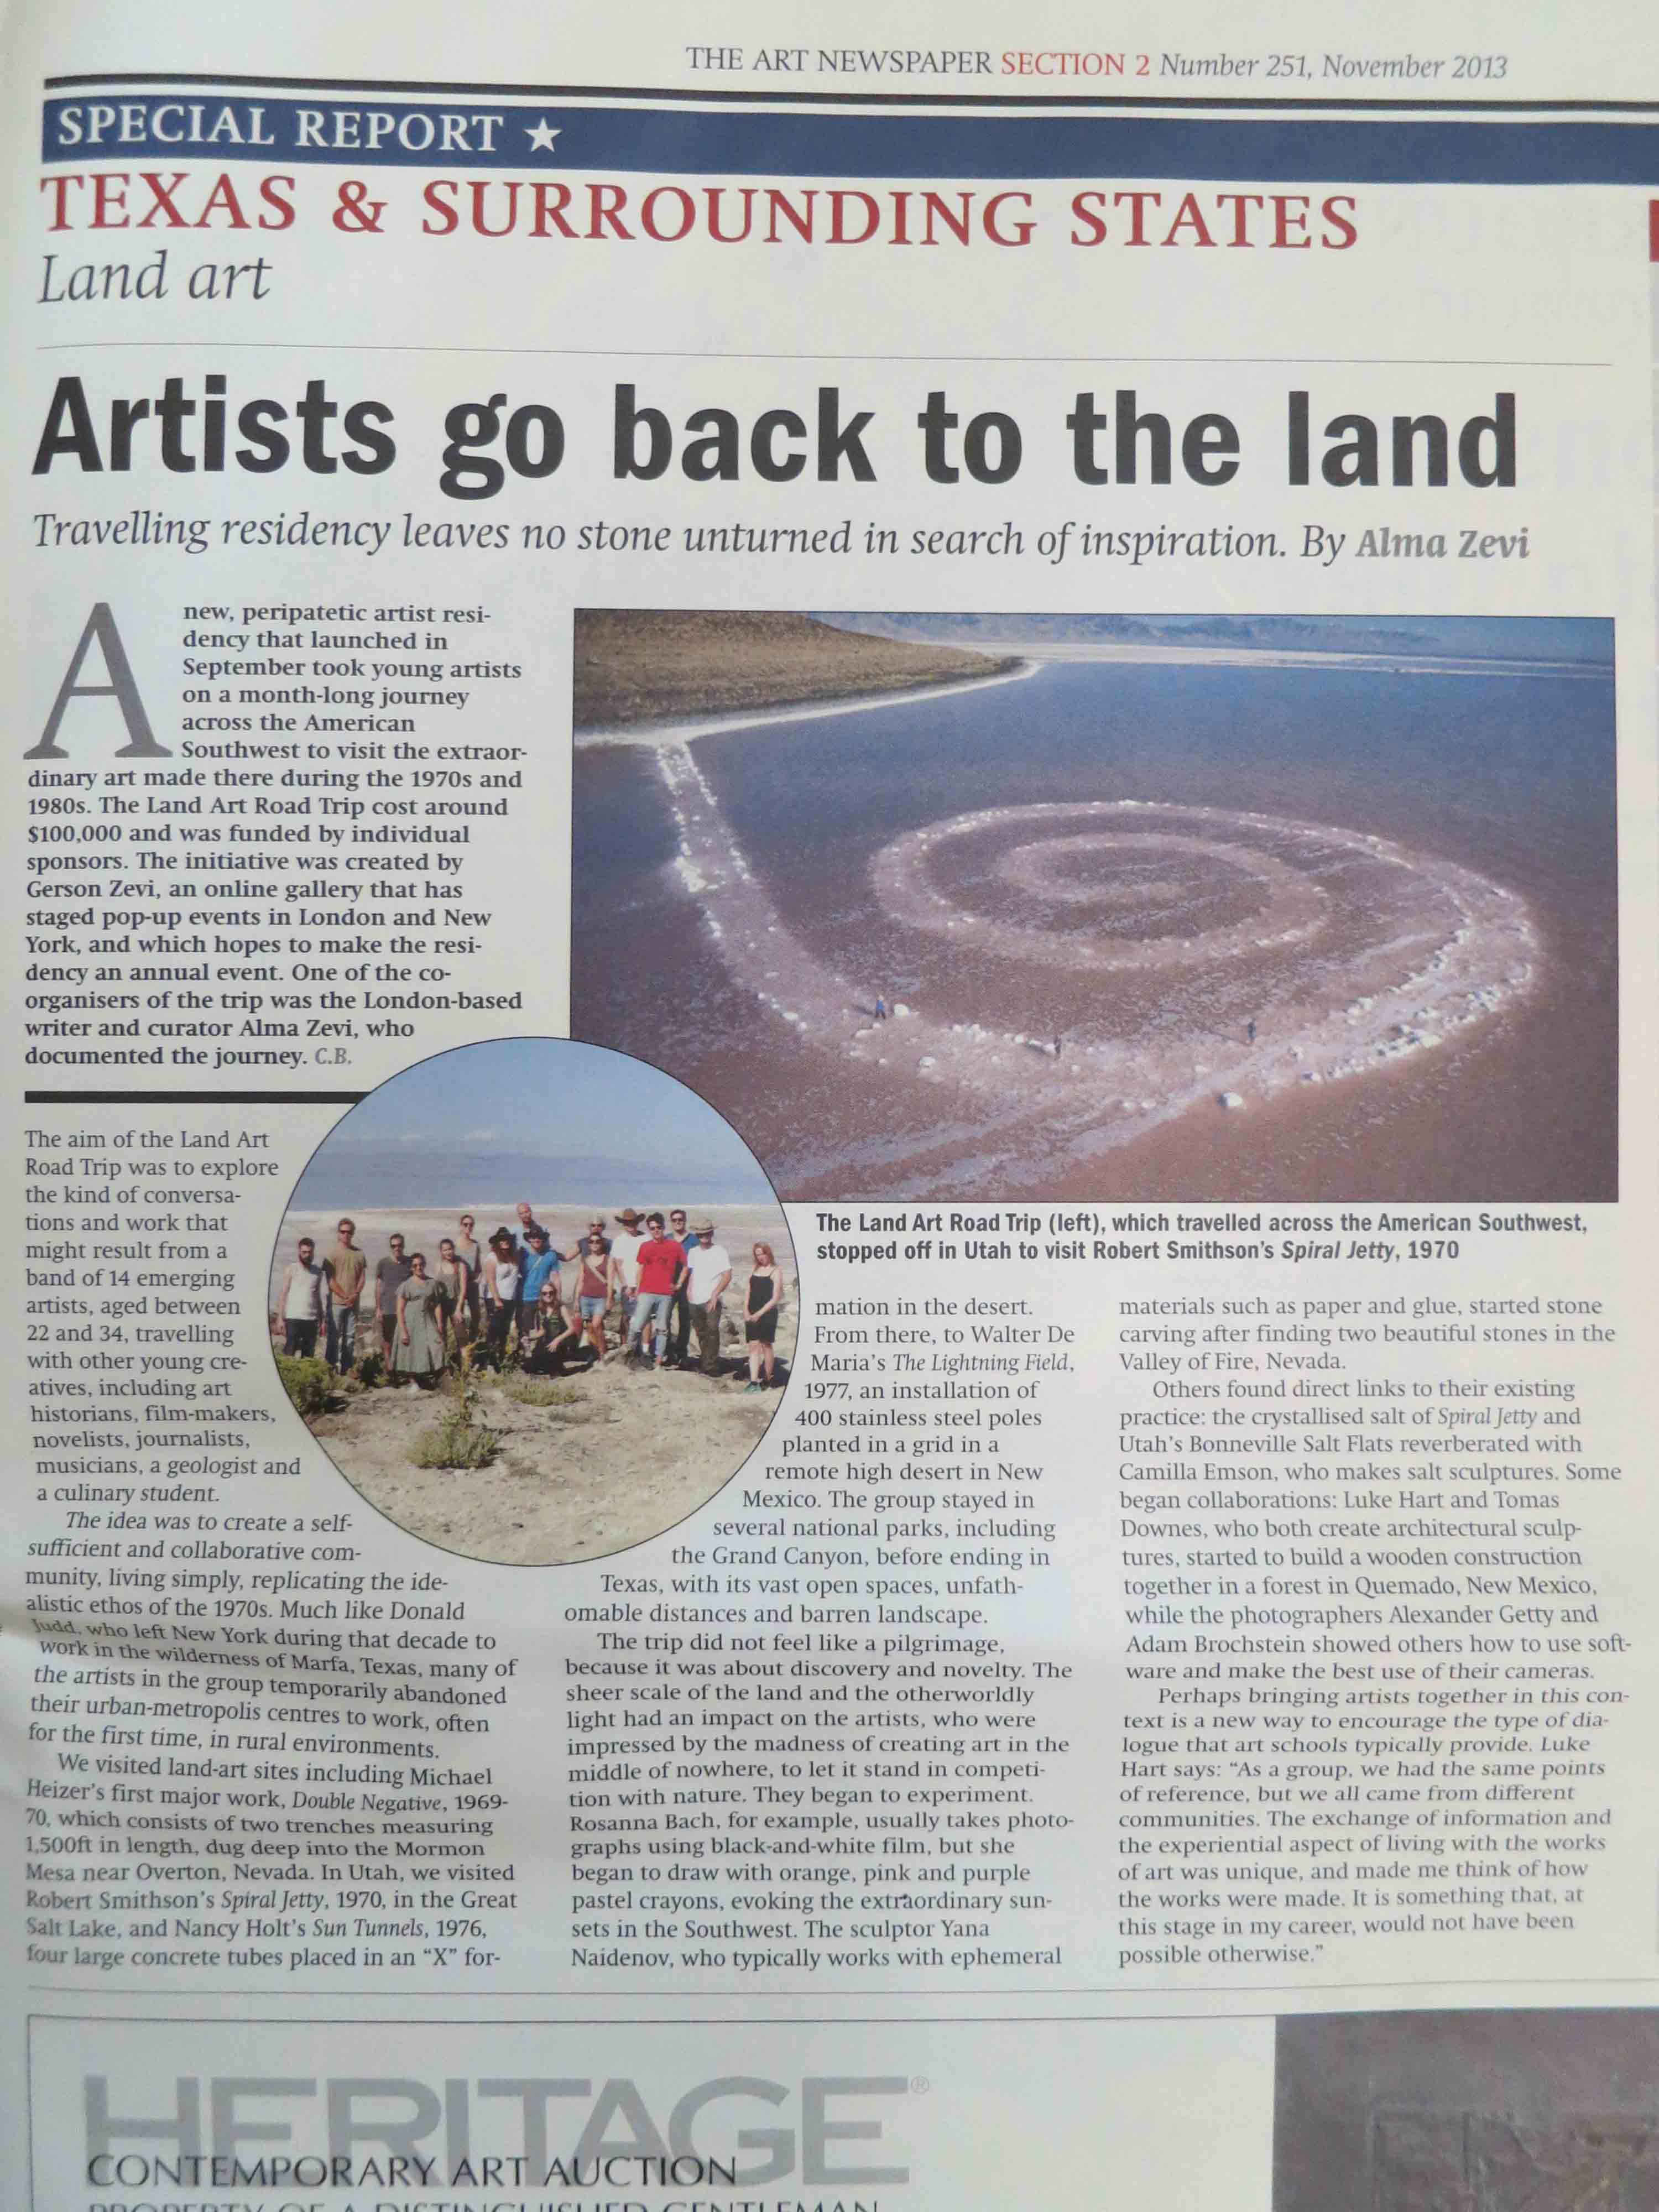 Artists Go Back to the Land, Art Newspaper article by Alma Zevi, Gerson Zevi, Land Art Road Trip, Yana Naidenov, 2014